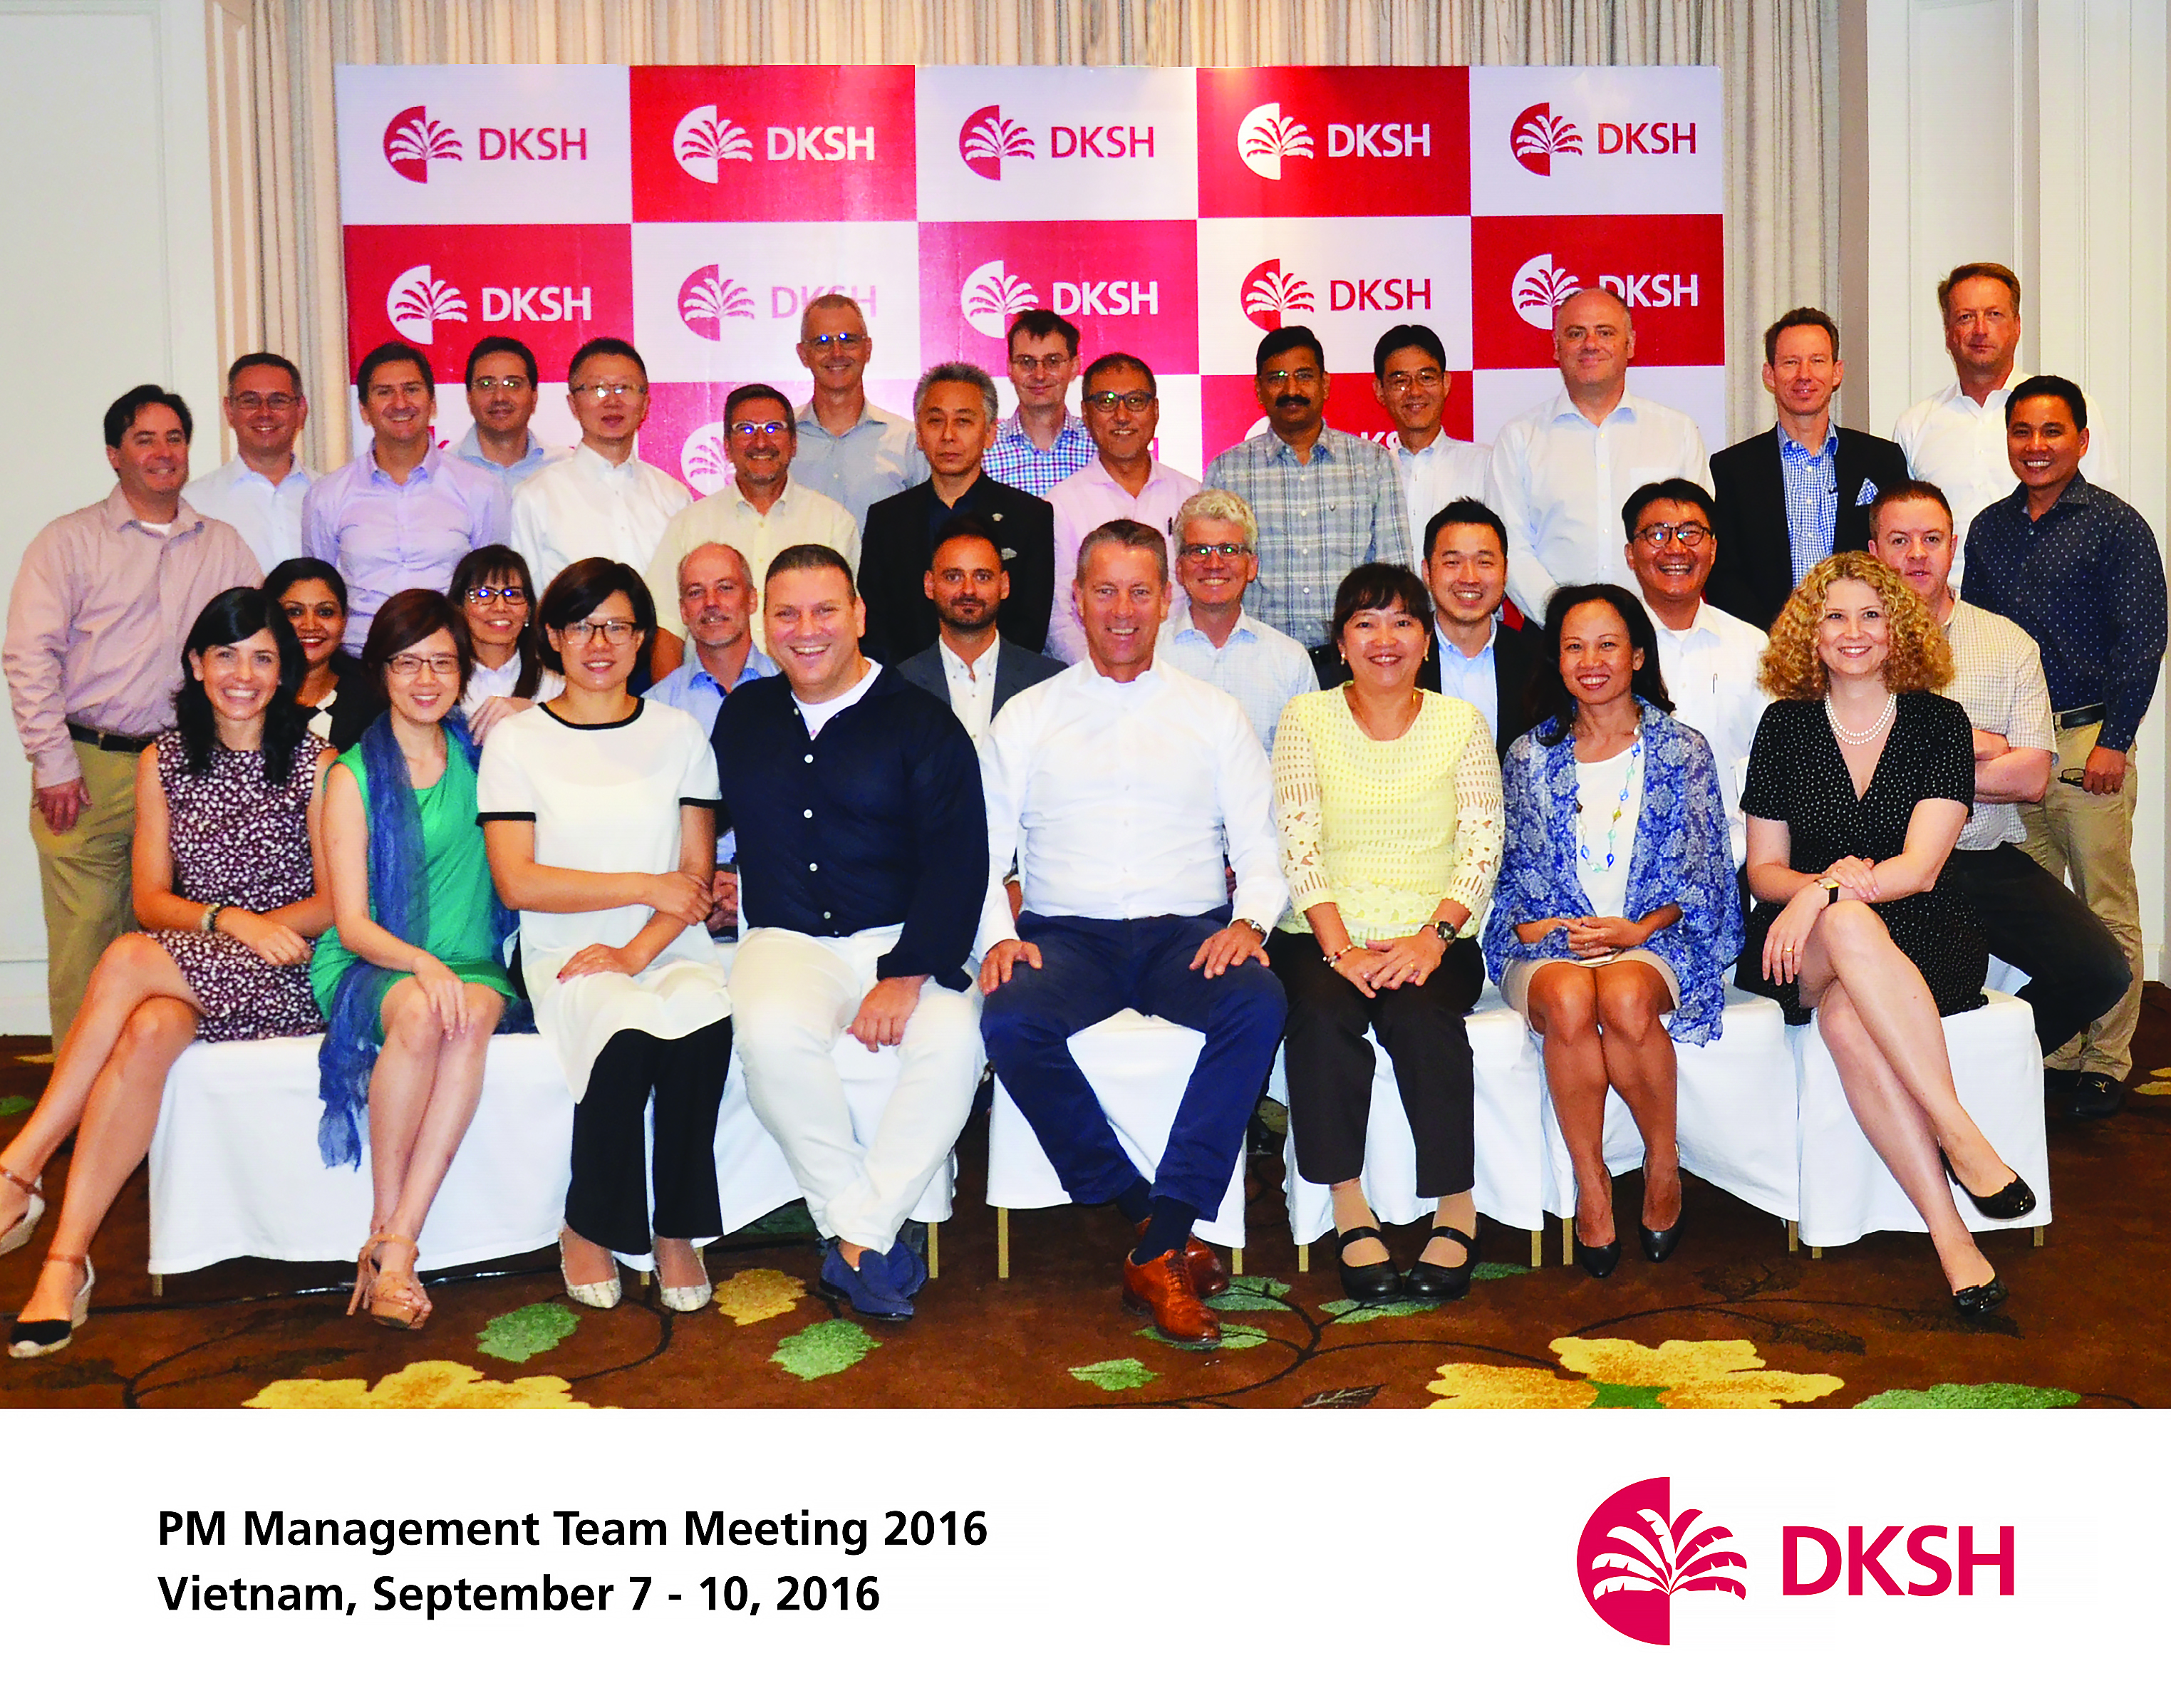 DKSH - PM Management Meeting 2016